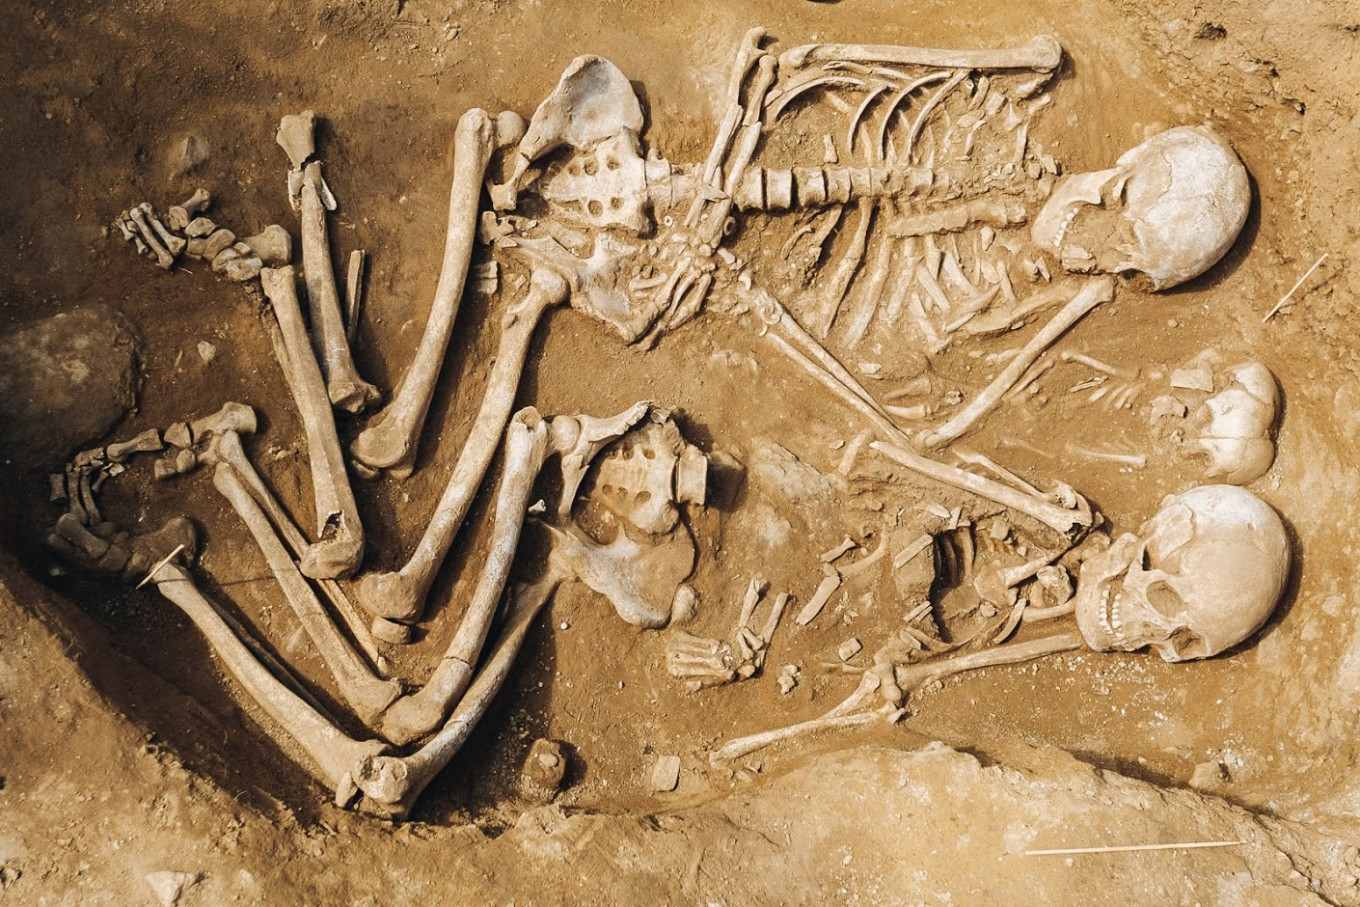 Siberian Farmer Unearths Neolithic Burial